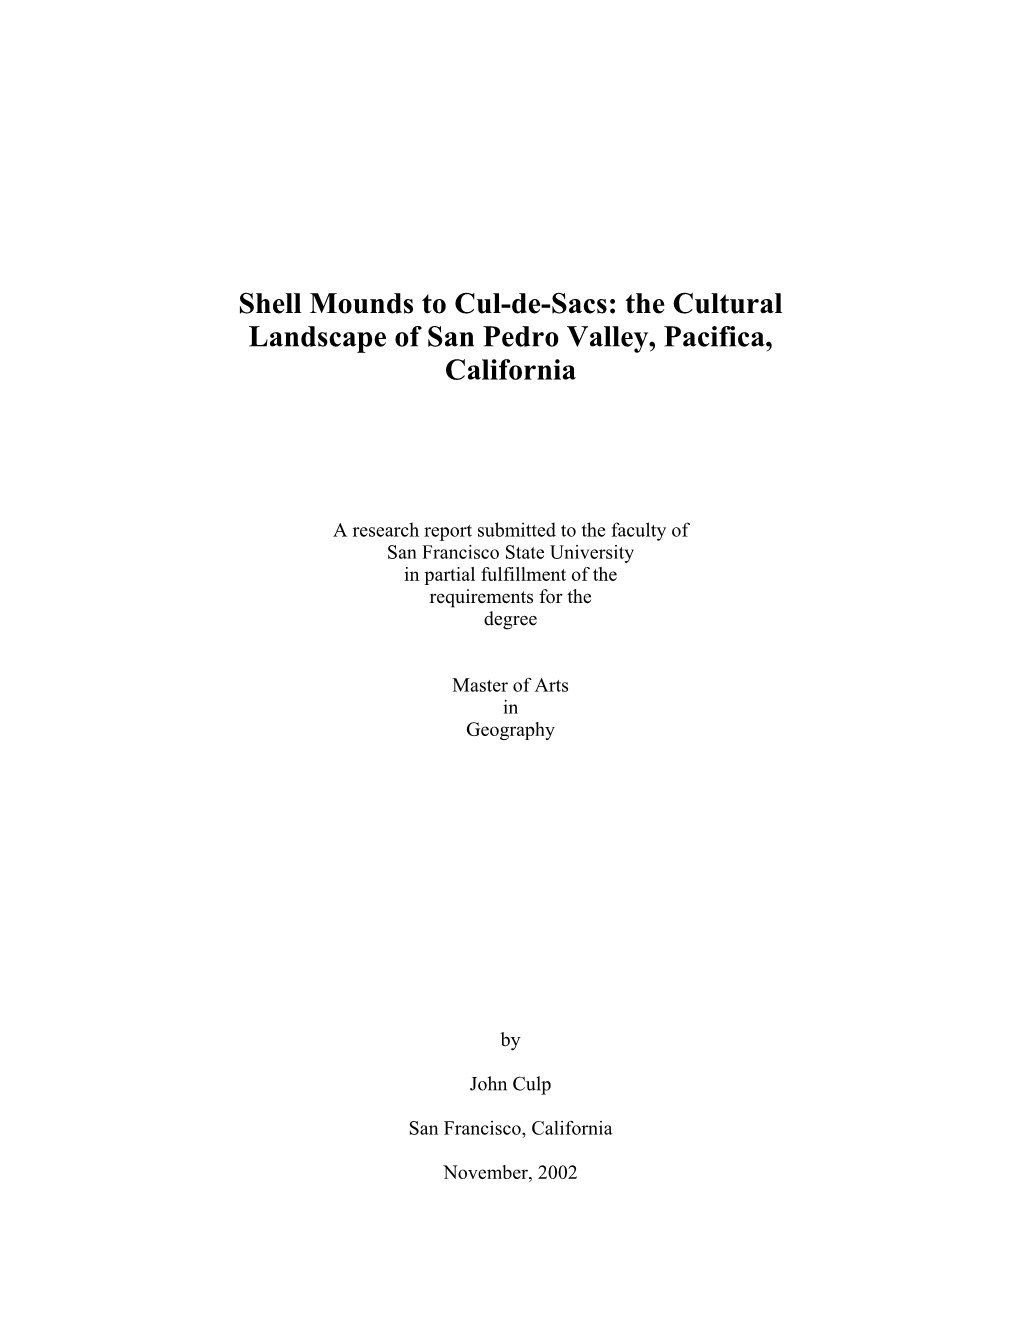 Shell Mounds to Cul-De-Sacs: the Cultural Landscape of San Pedro Valley, Pacifica, California